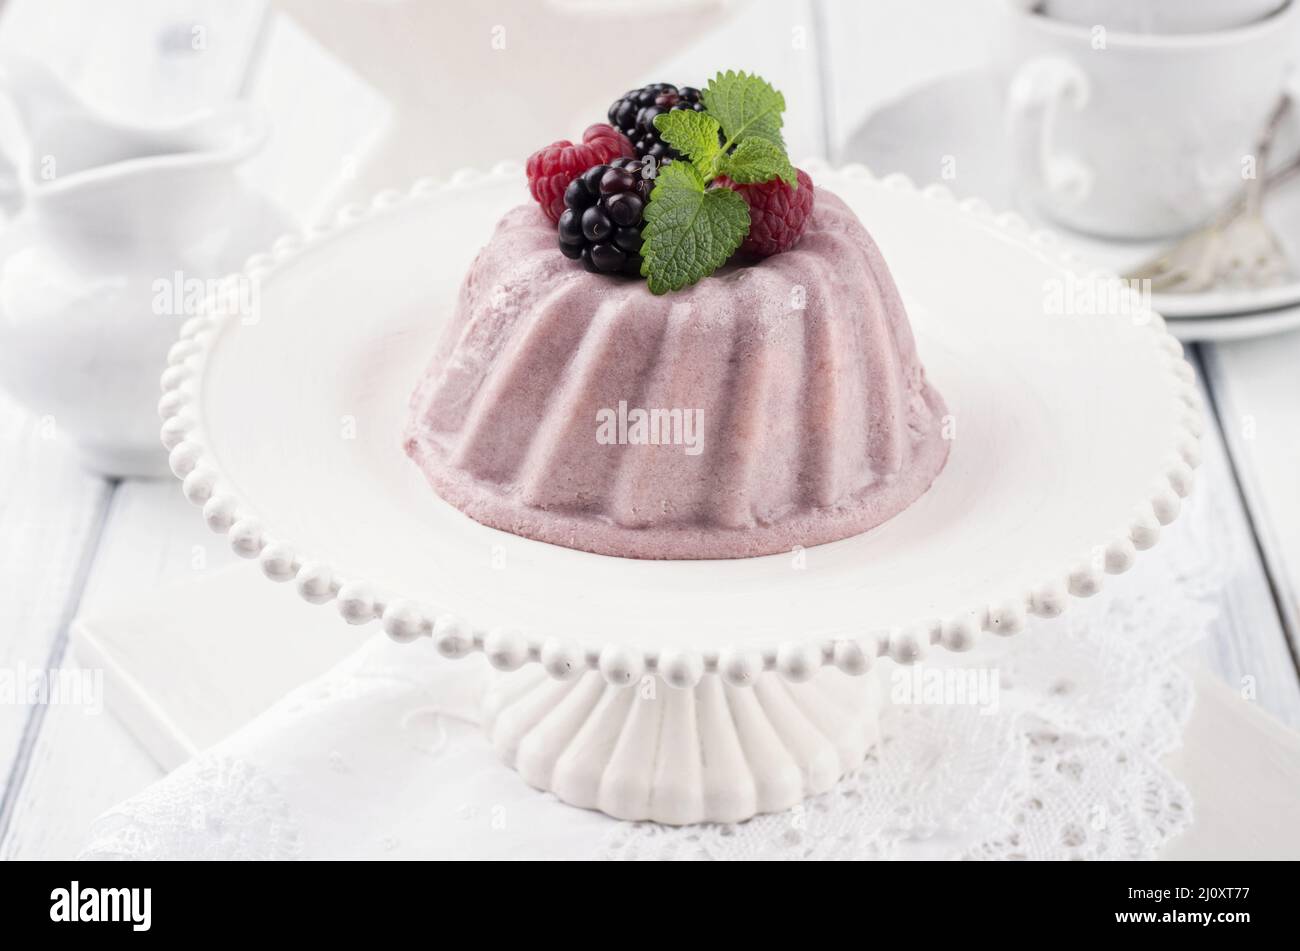 Pudding dessert Stock Photo